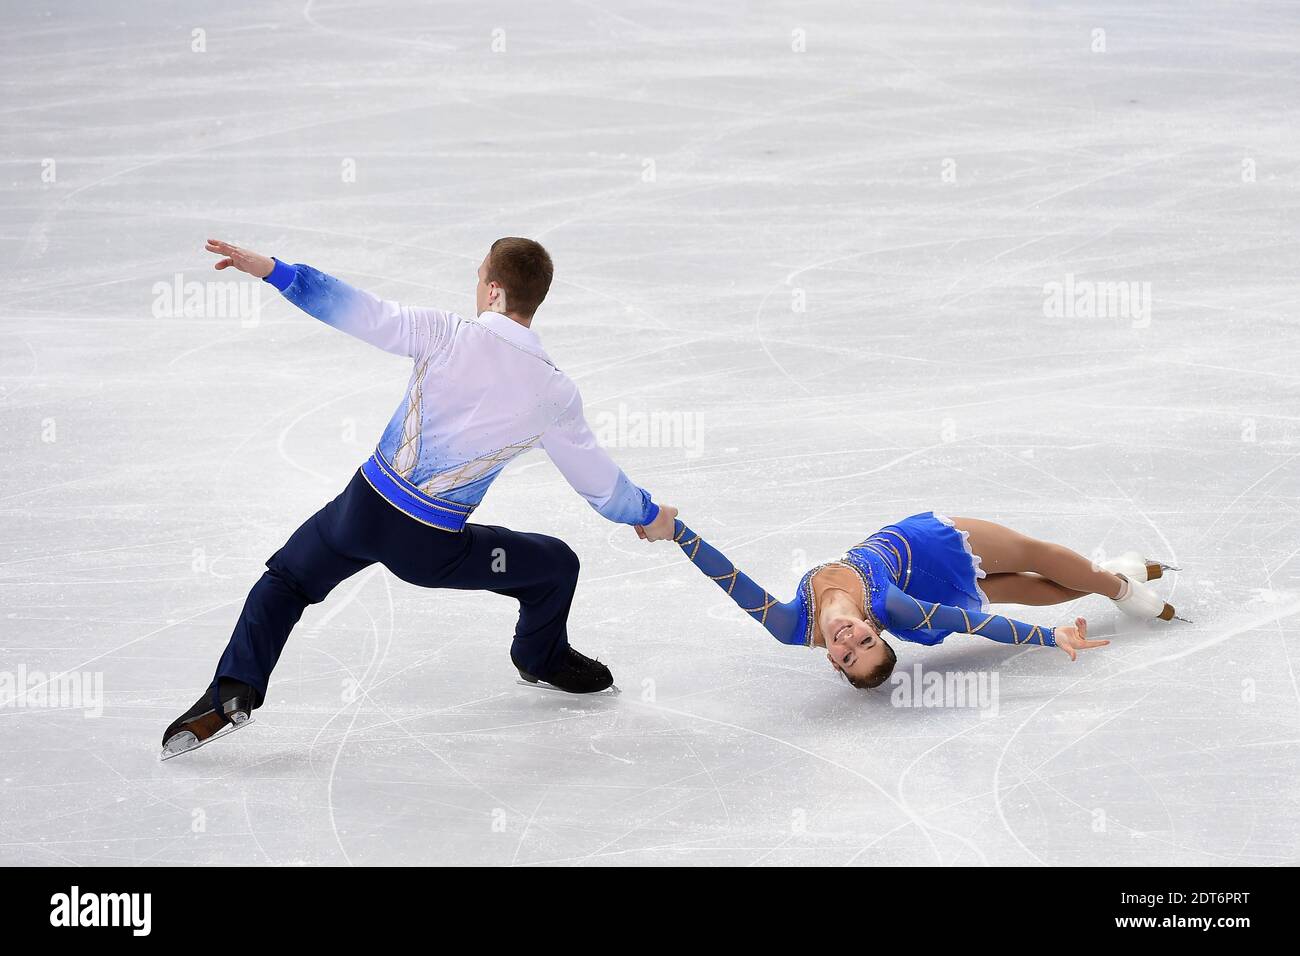 Andrea Davidovich and Evgueni Krasnopovski during the Pairs Free Skating on day 5 of the Sochi 2014 Winter Olympics at the Iceberg on February 12, 2014 in Sochi, Russia. Photo by Gouhier-Zabulon/ABACAPRESS.COM Stock Photo